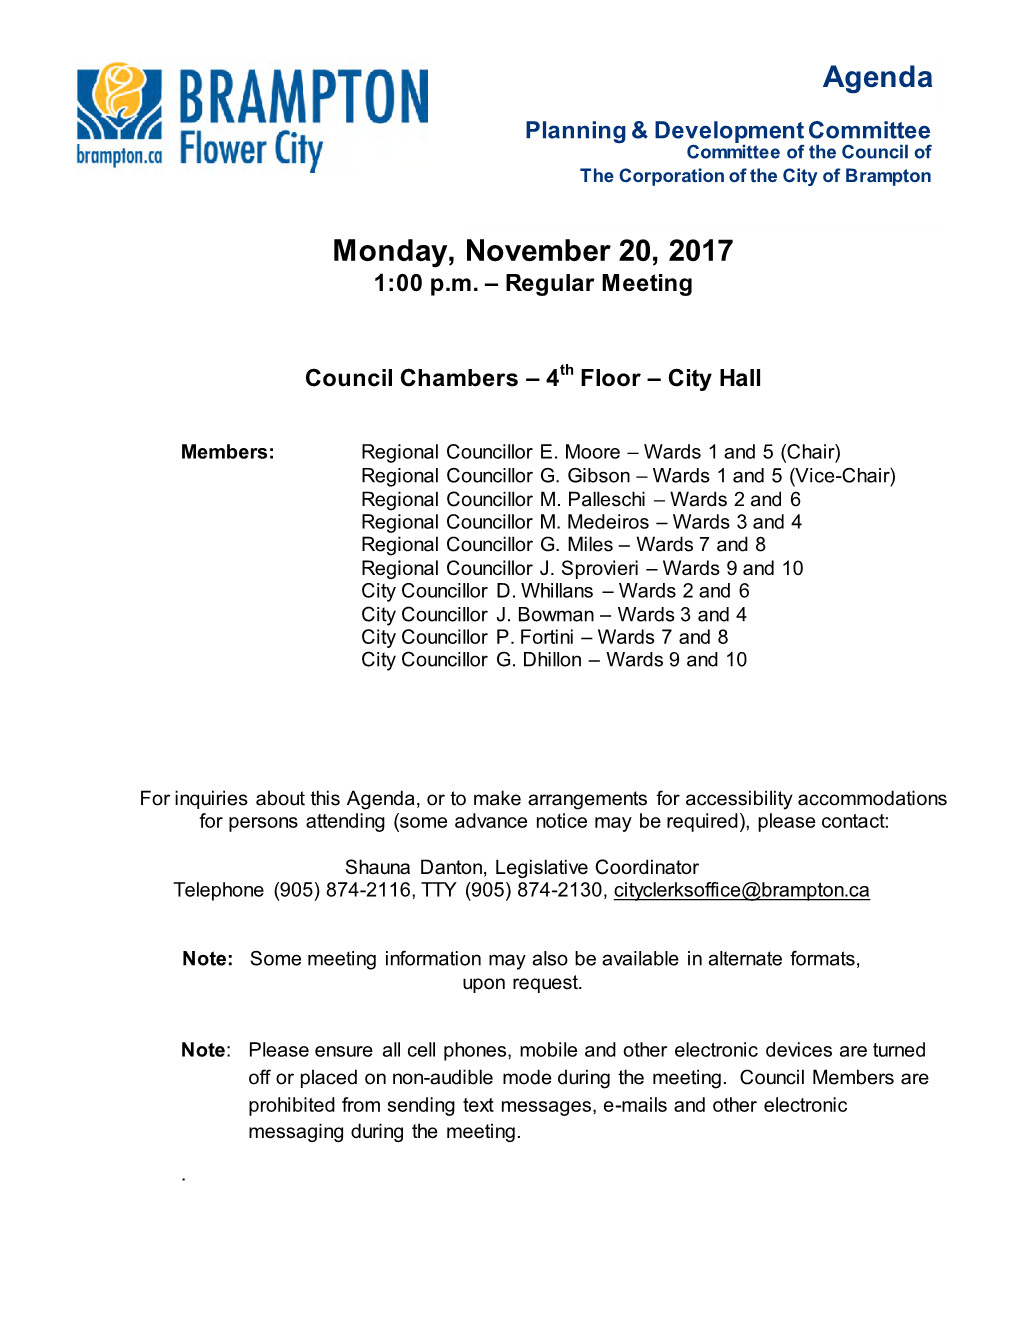 Planning and Development Committee Agenda for November